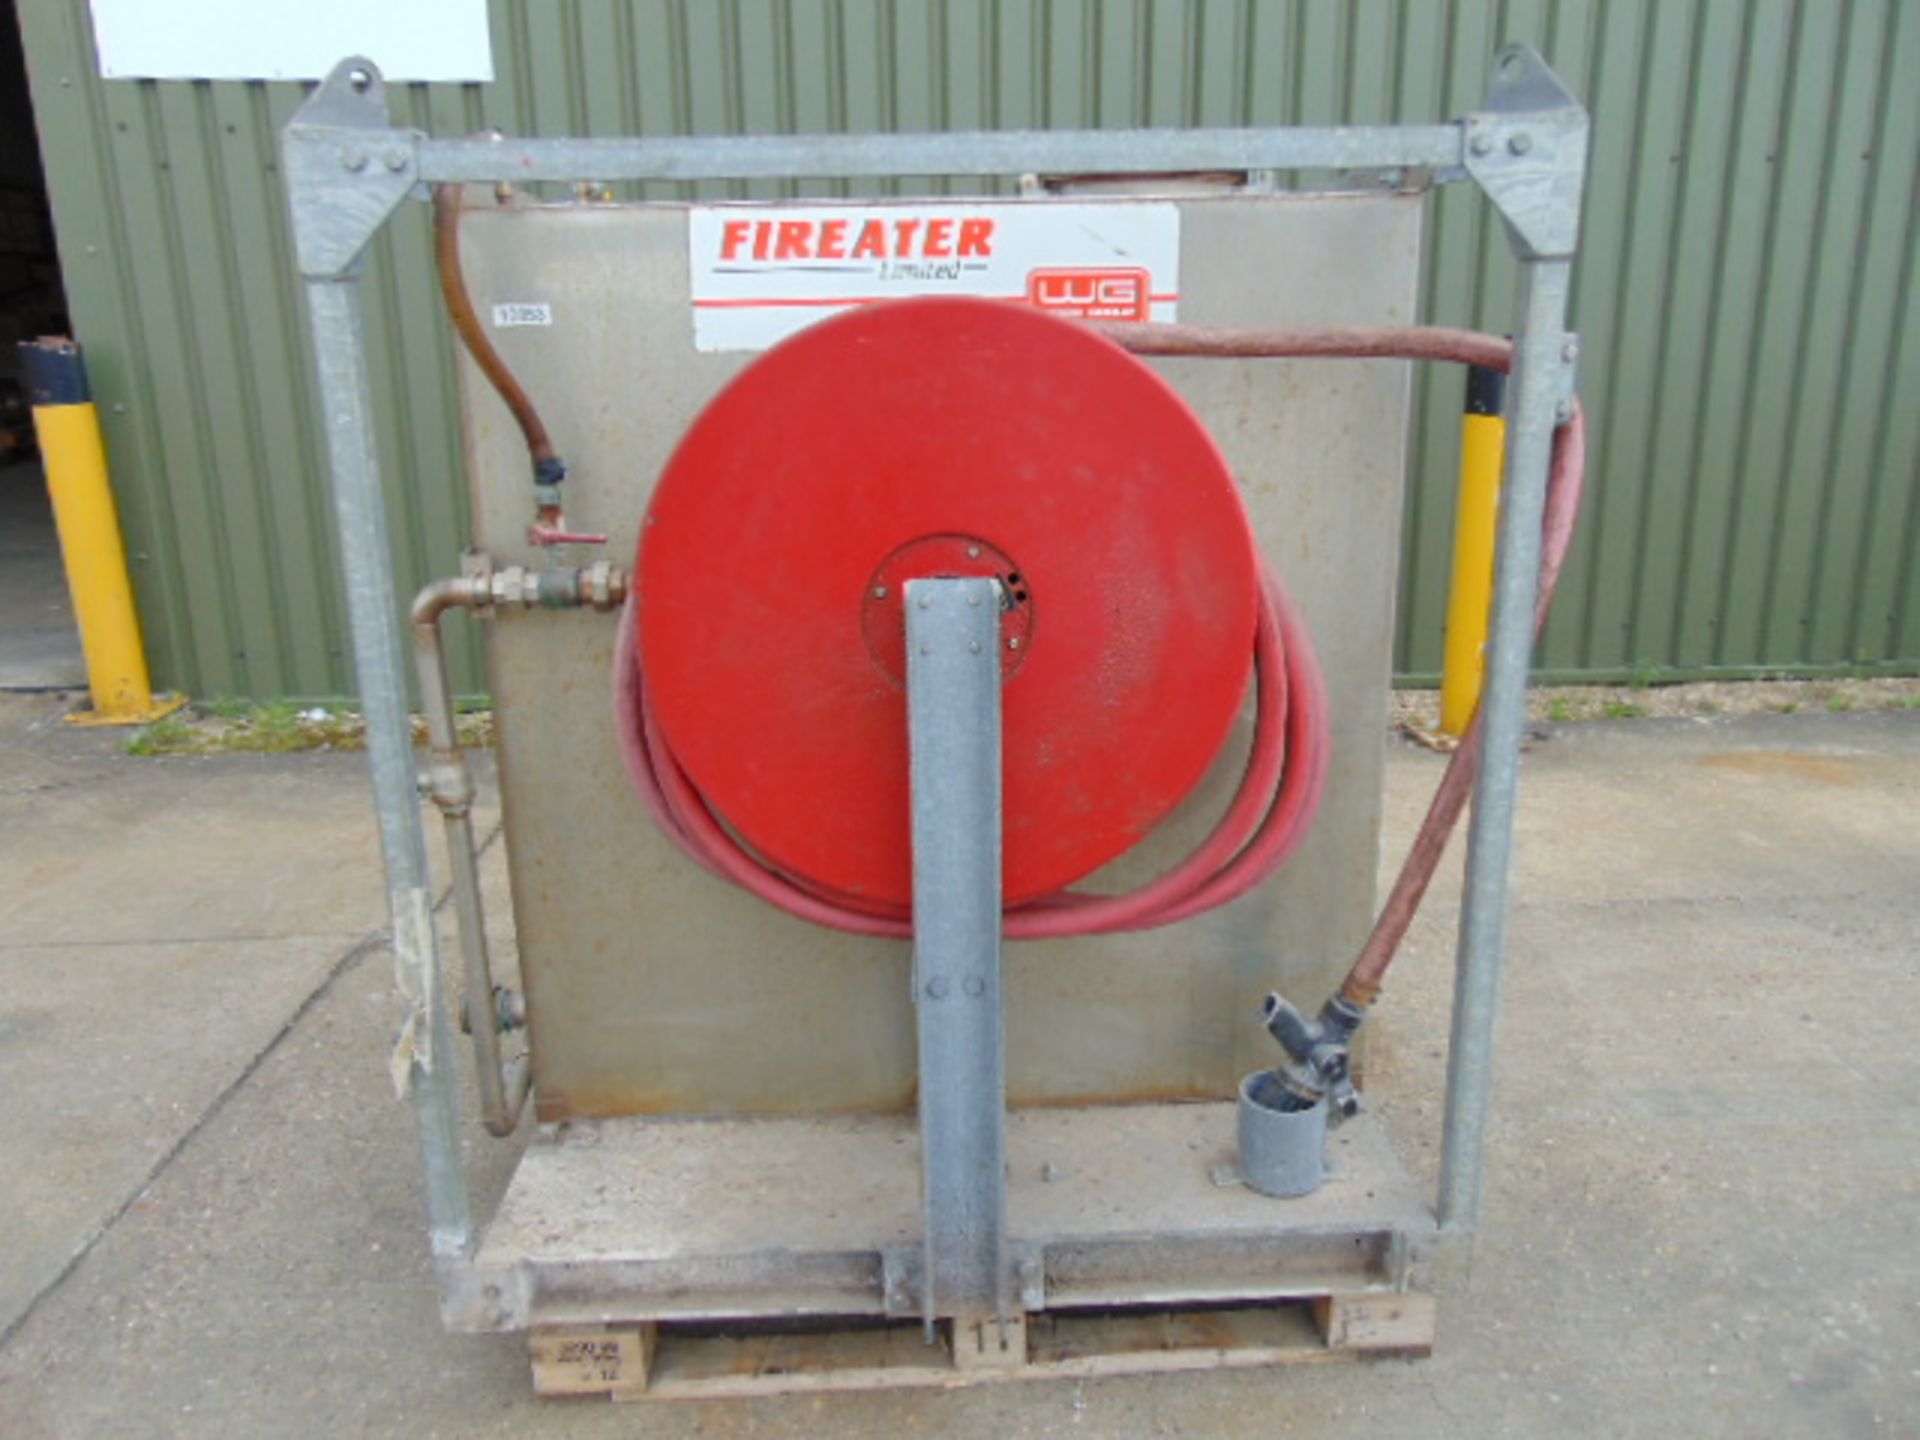 700L Fireater AFFF (Aqueous Film-Forming Foam) stainless steelTanks c/w 2 x 10m Fire Hose Reels.